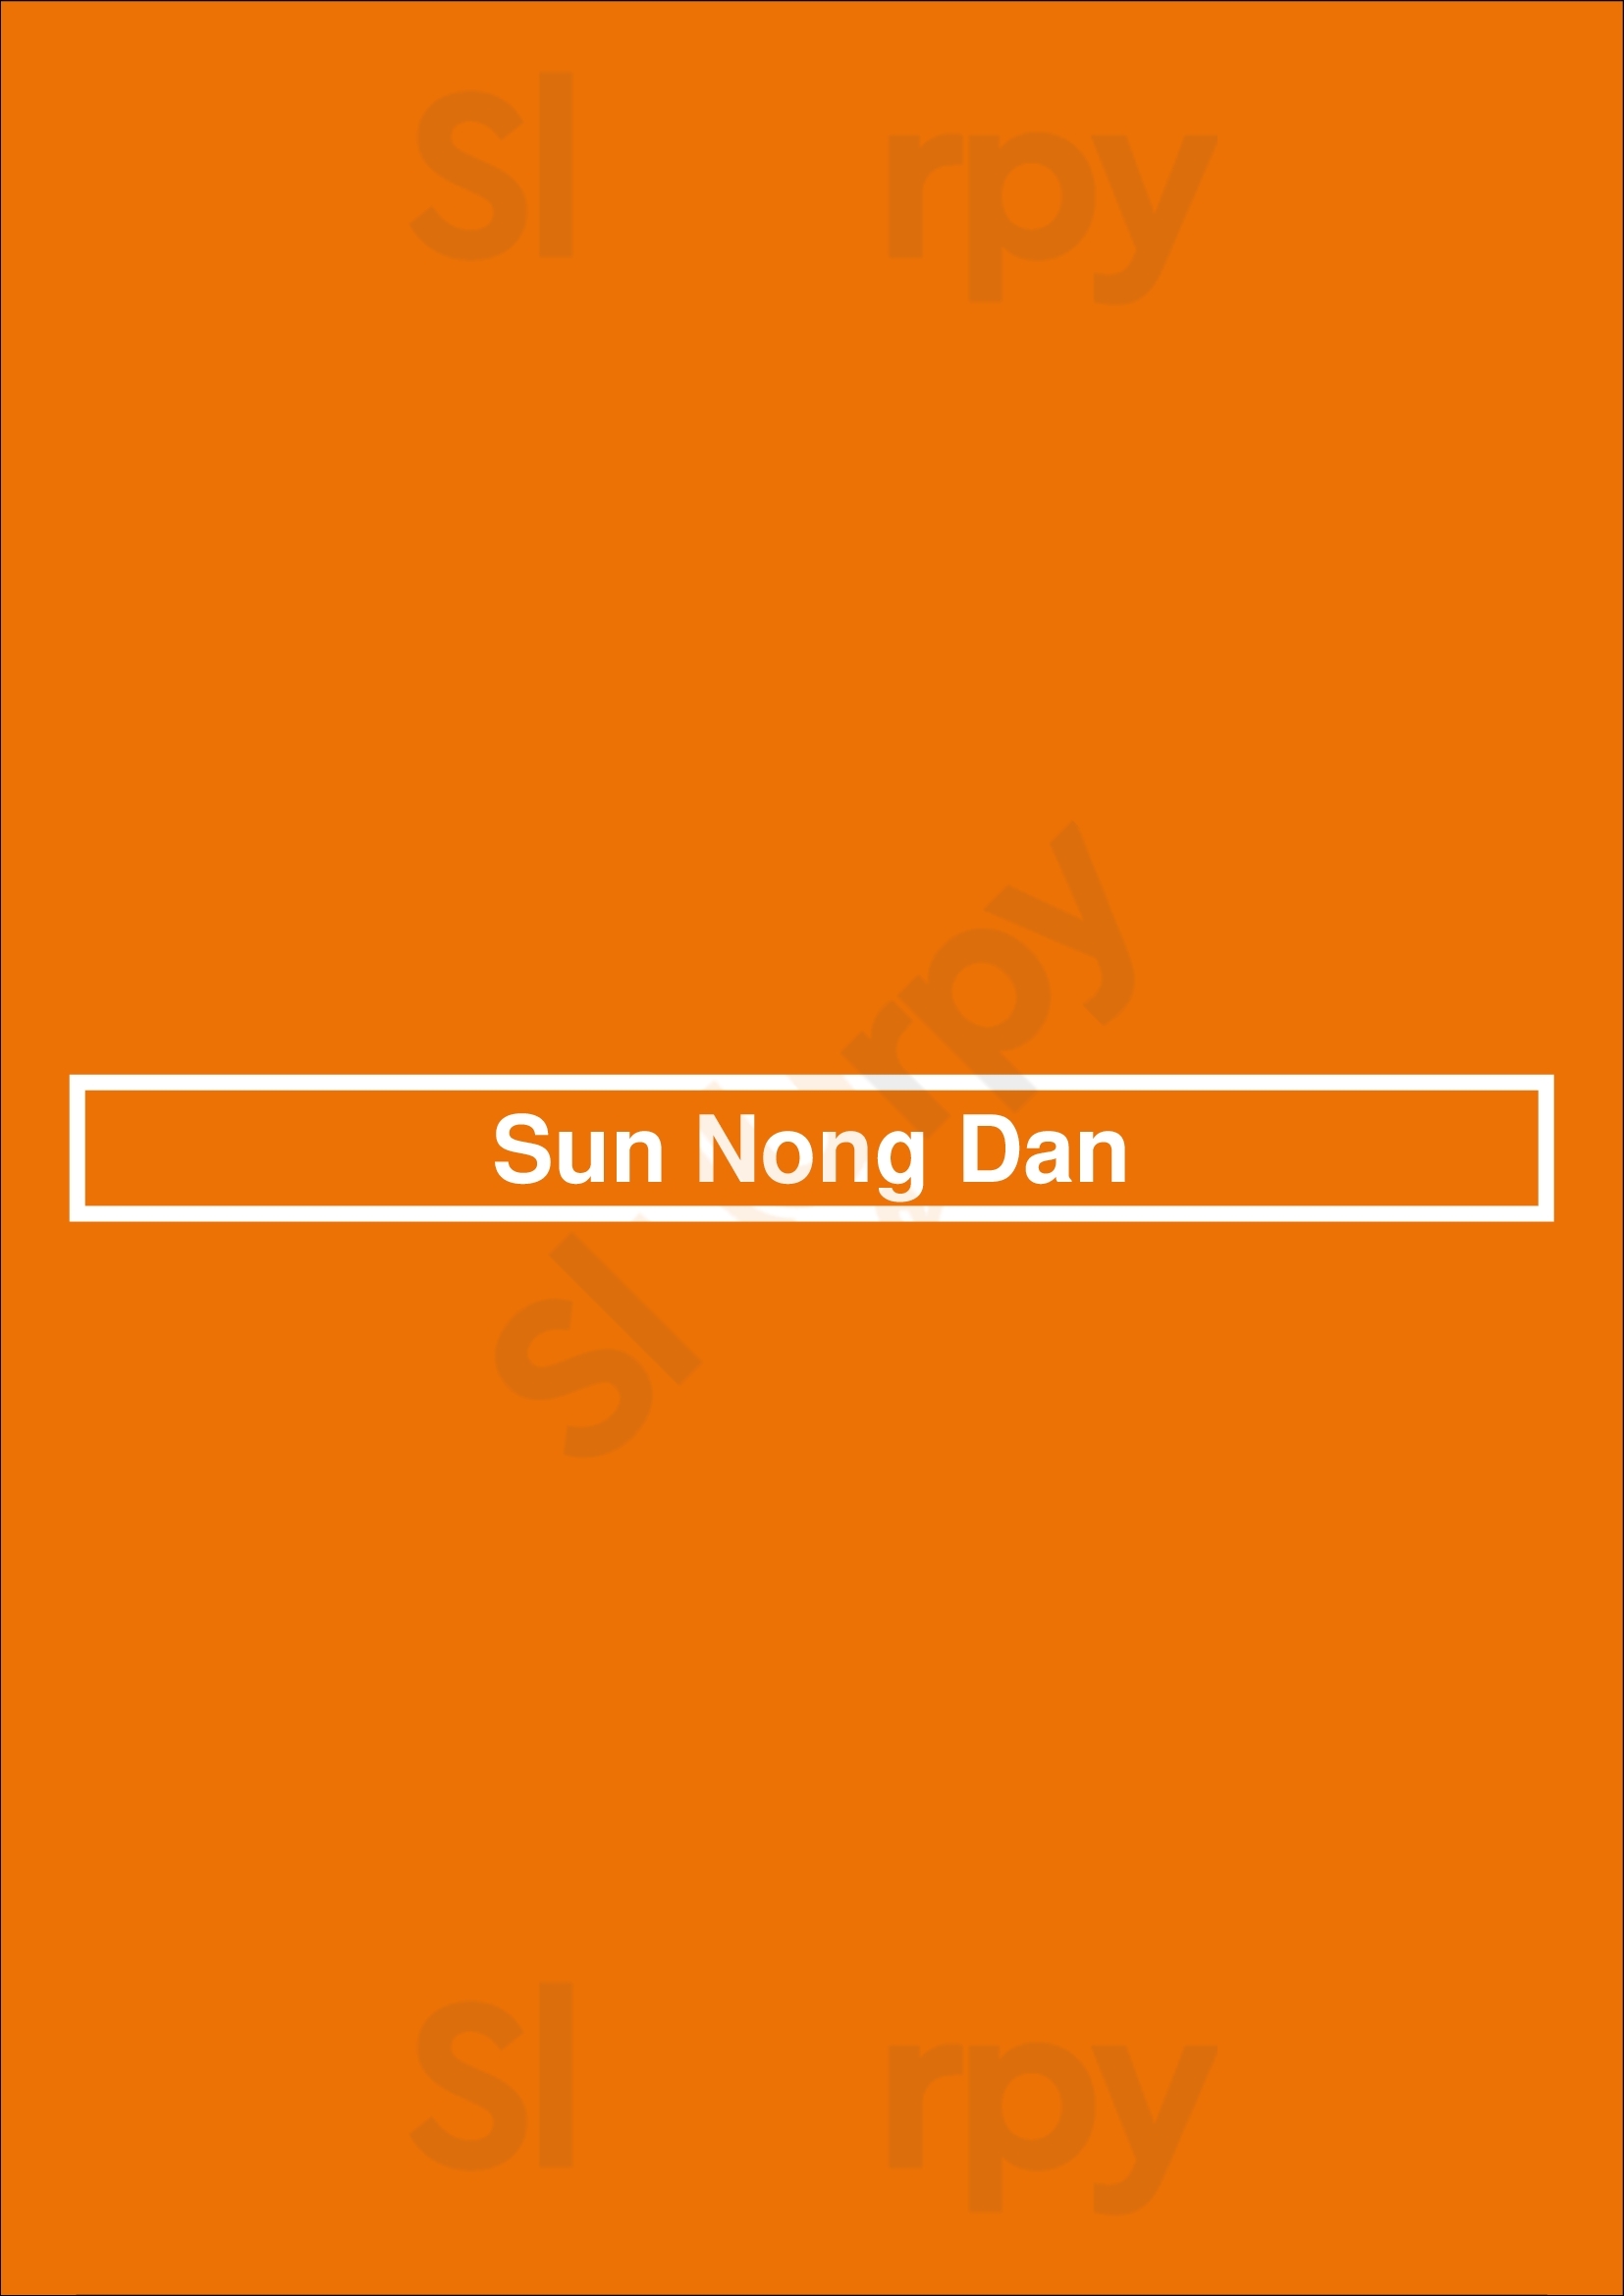 Sun Nong Dan Rowland Heights Menu - 1